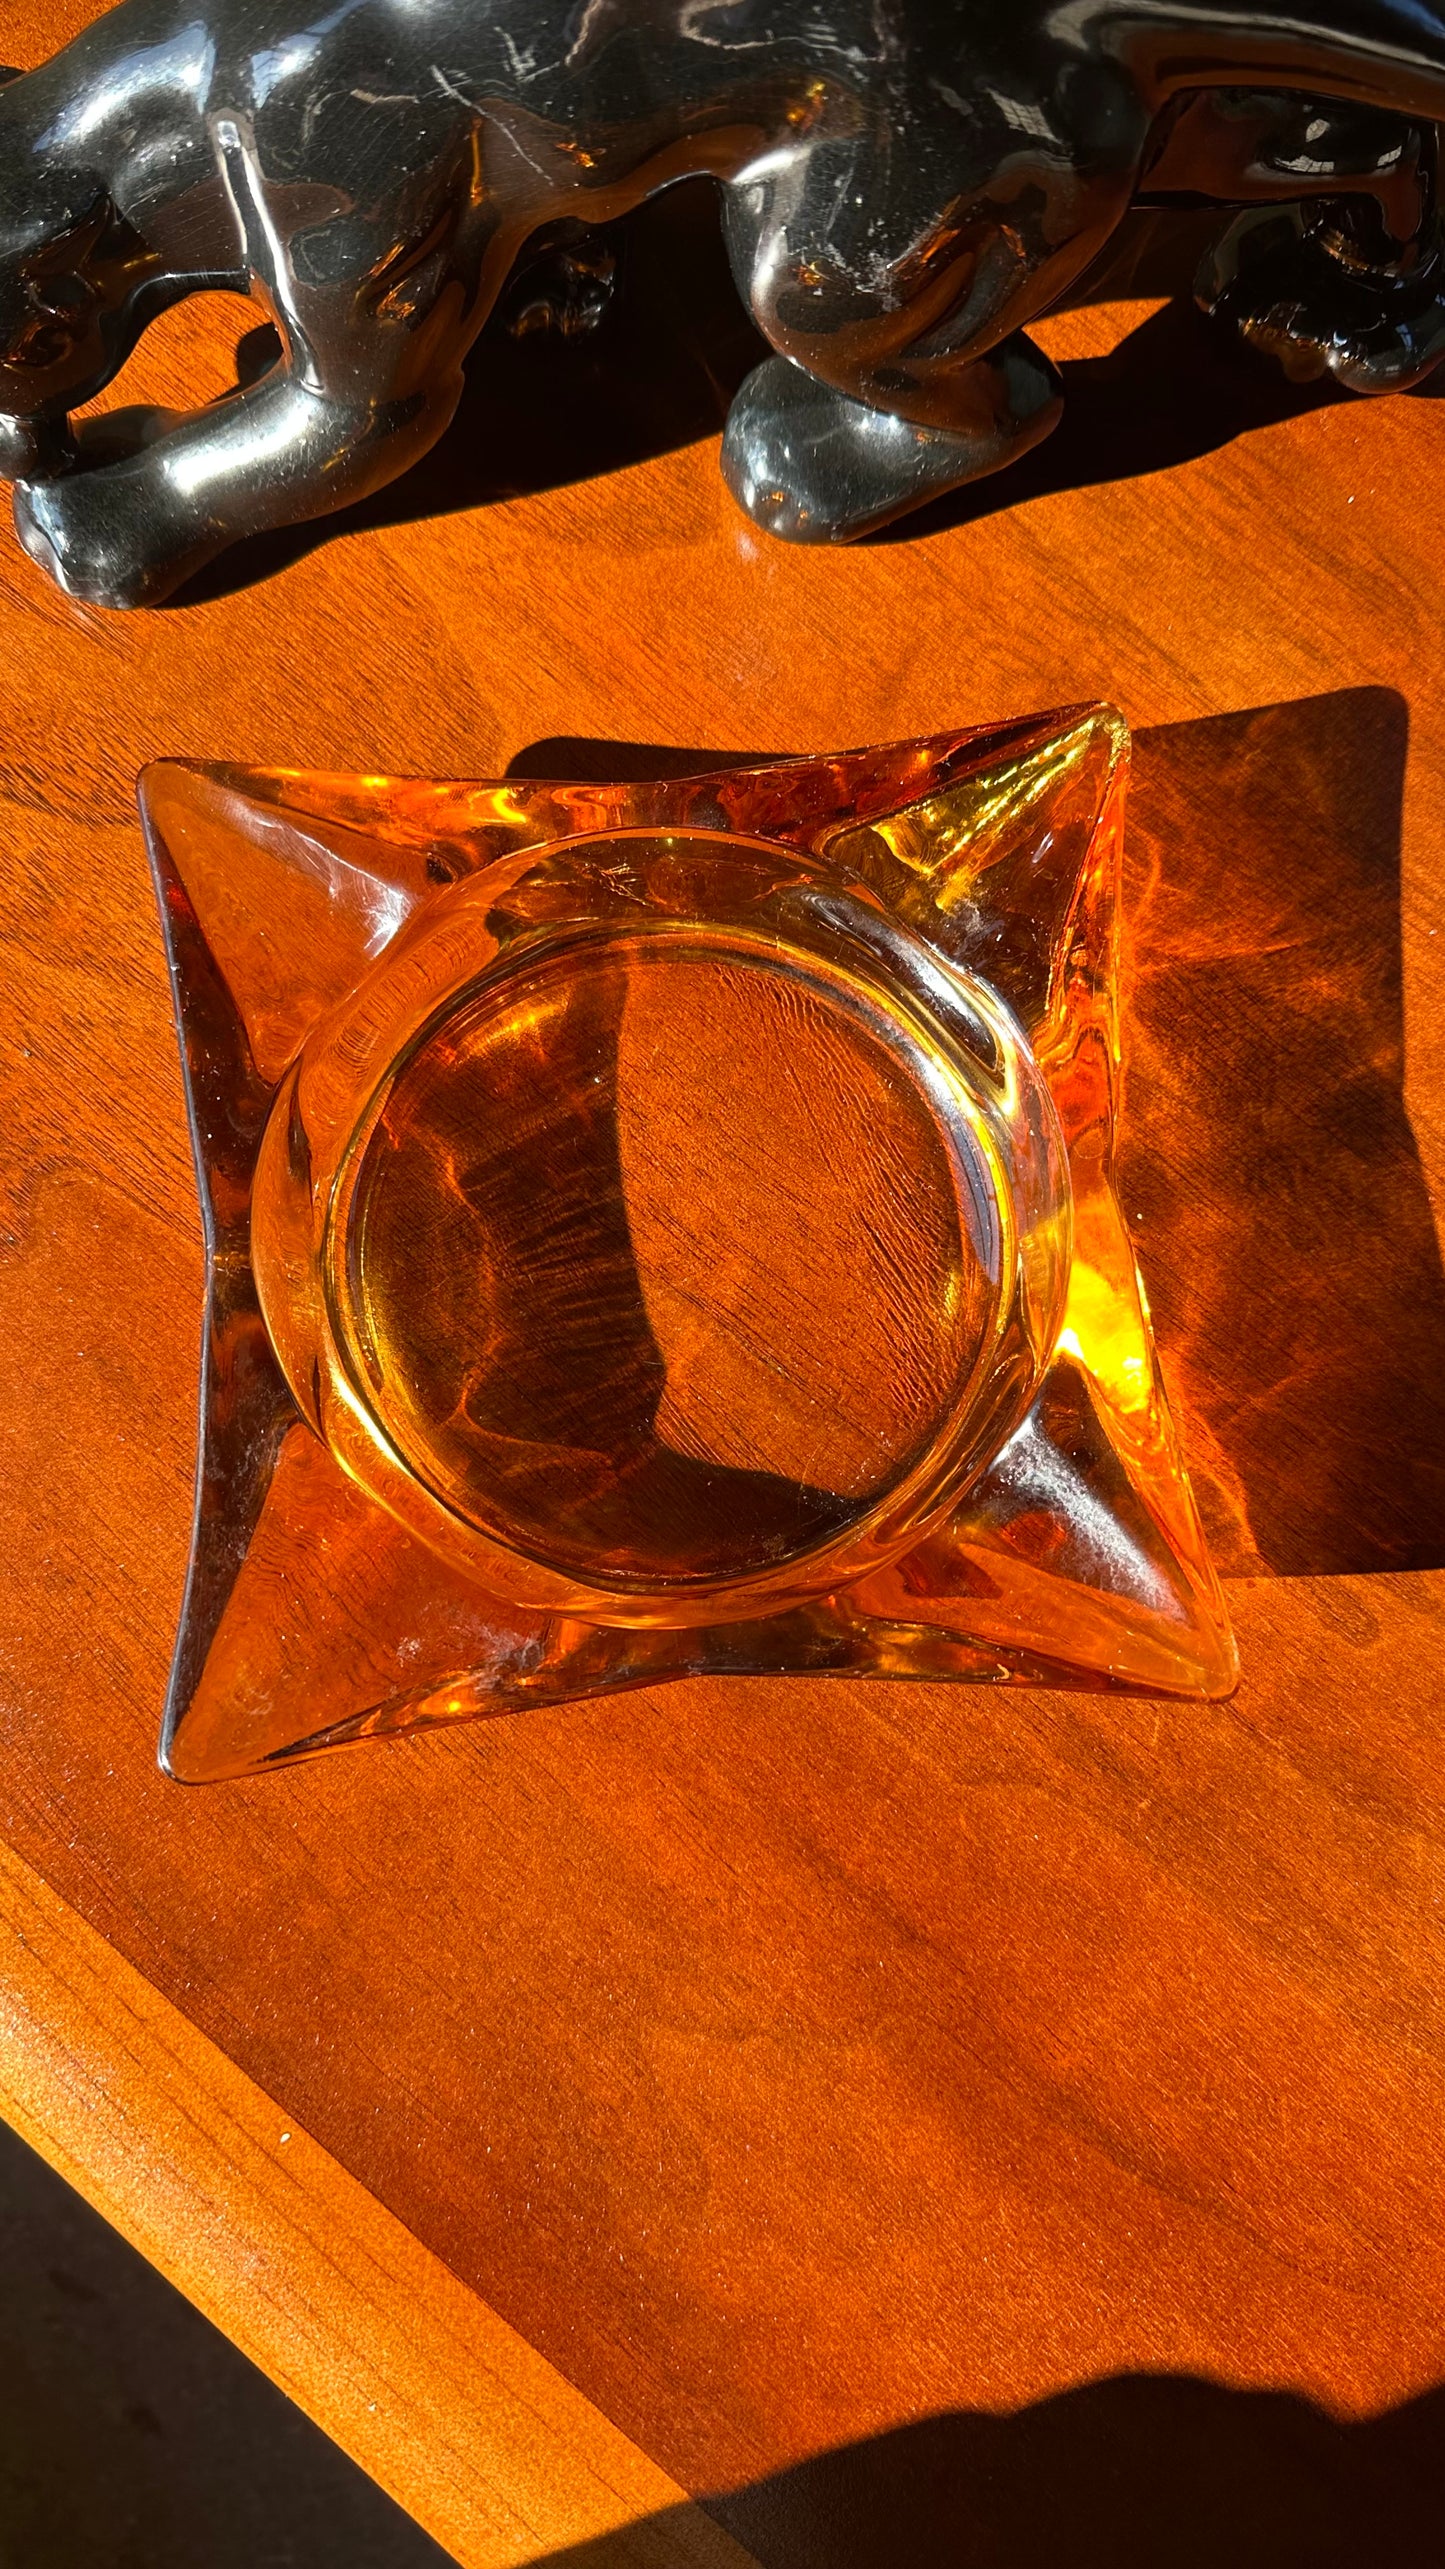 Amber Glass Ashtray